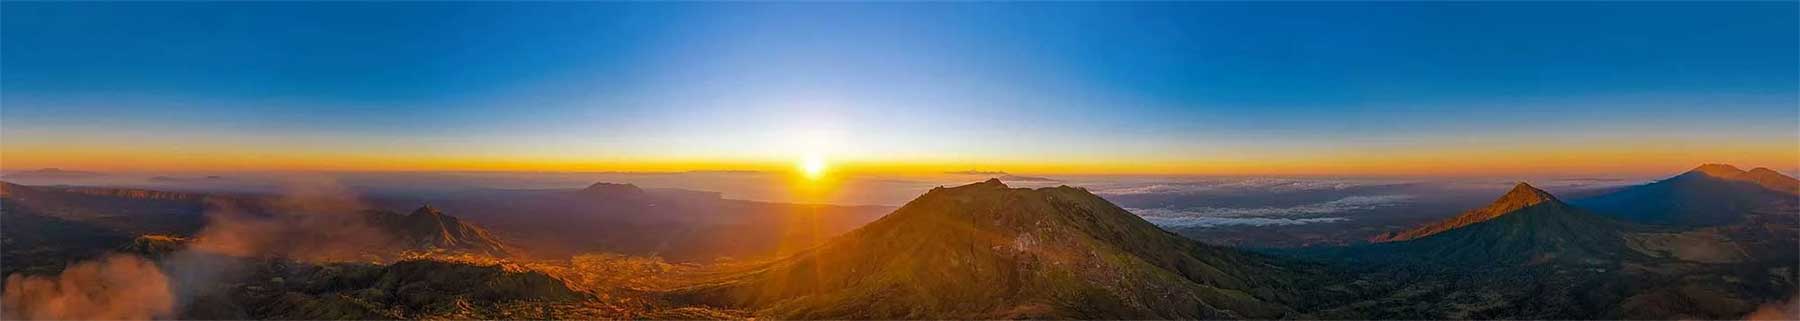 Sabbath Truth - Sunrise over Mountains